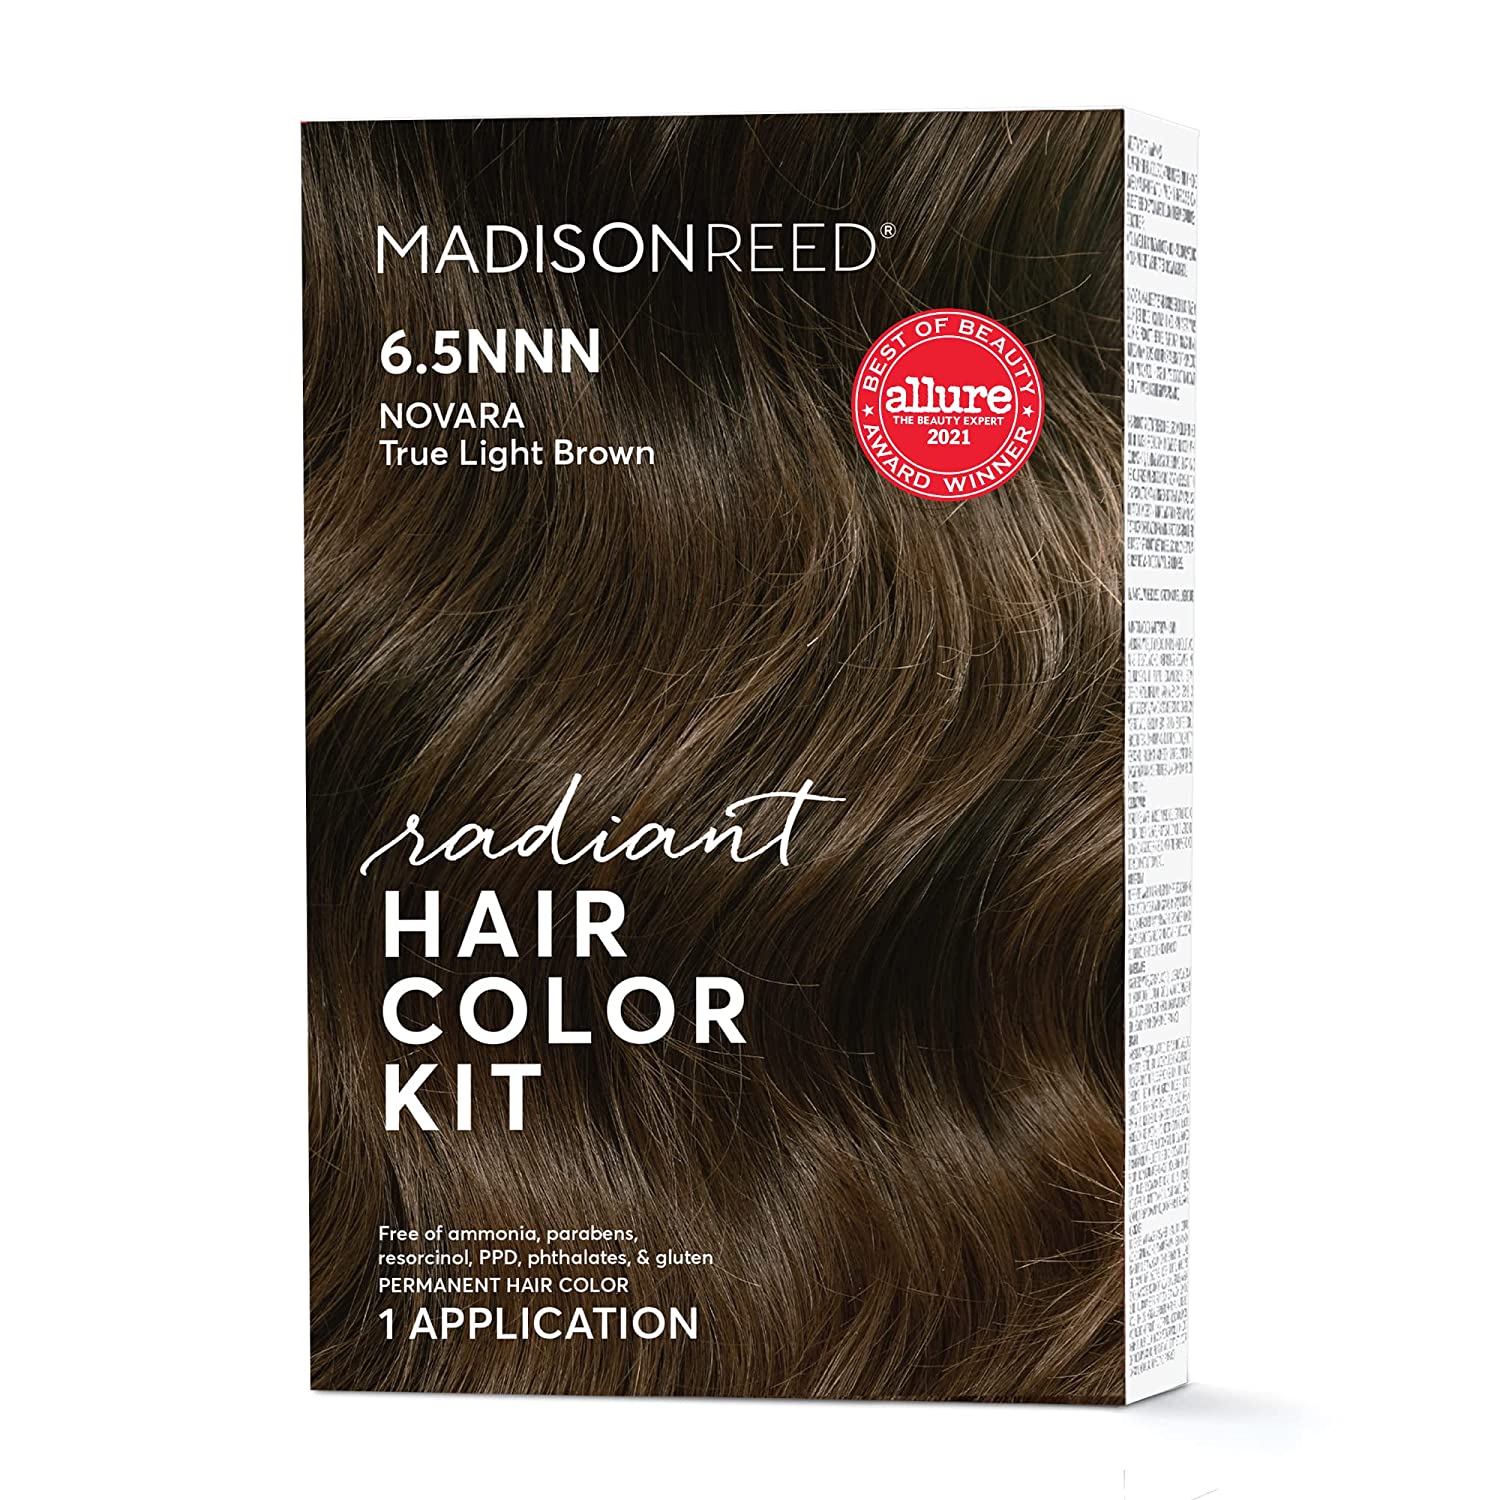 Madison Reed Radiant Hair Color Kit, Permanent Hair Dye, 100% Gray Coverage, Ammonia-Free - Novara True Light Brown 6.5NNN